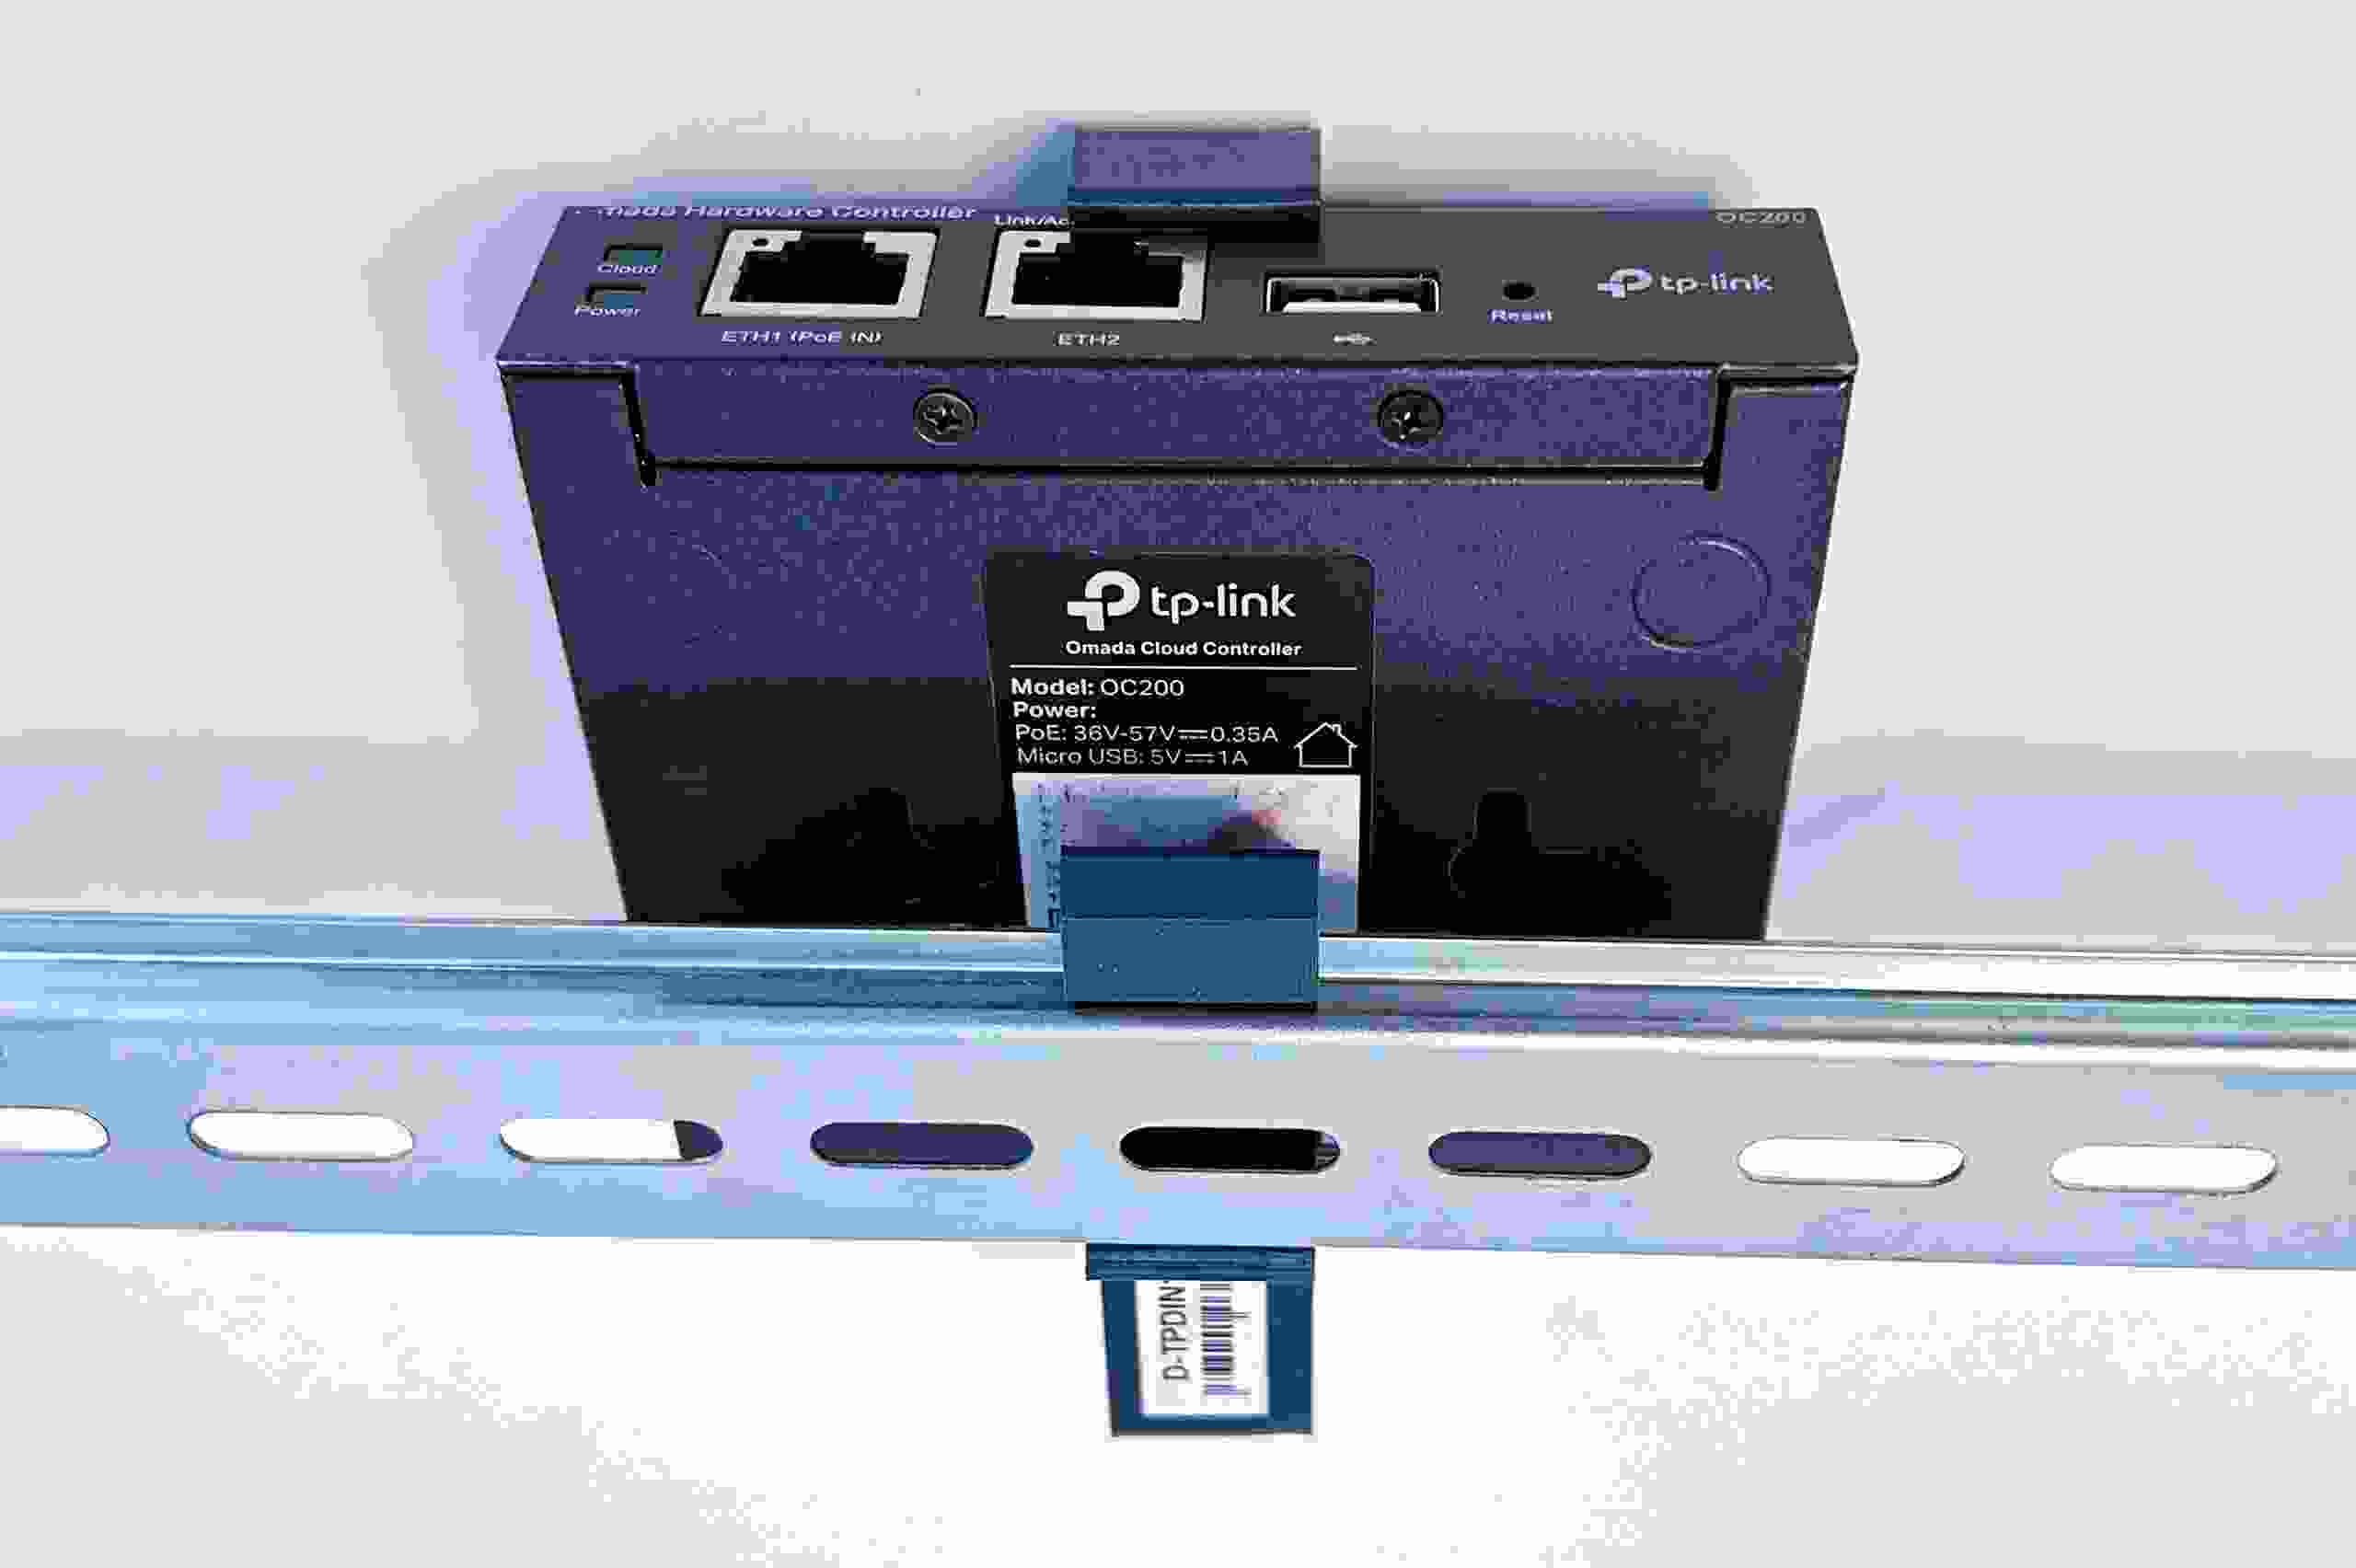 TP-Link D-TPDIN100 Držák na DIN lištu pro OC200, SF1005xx, SG105xx, SG1005xx, šedý6 